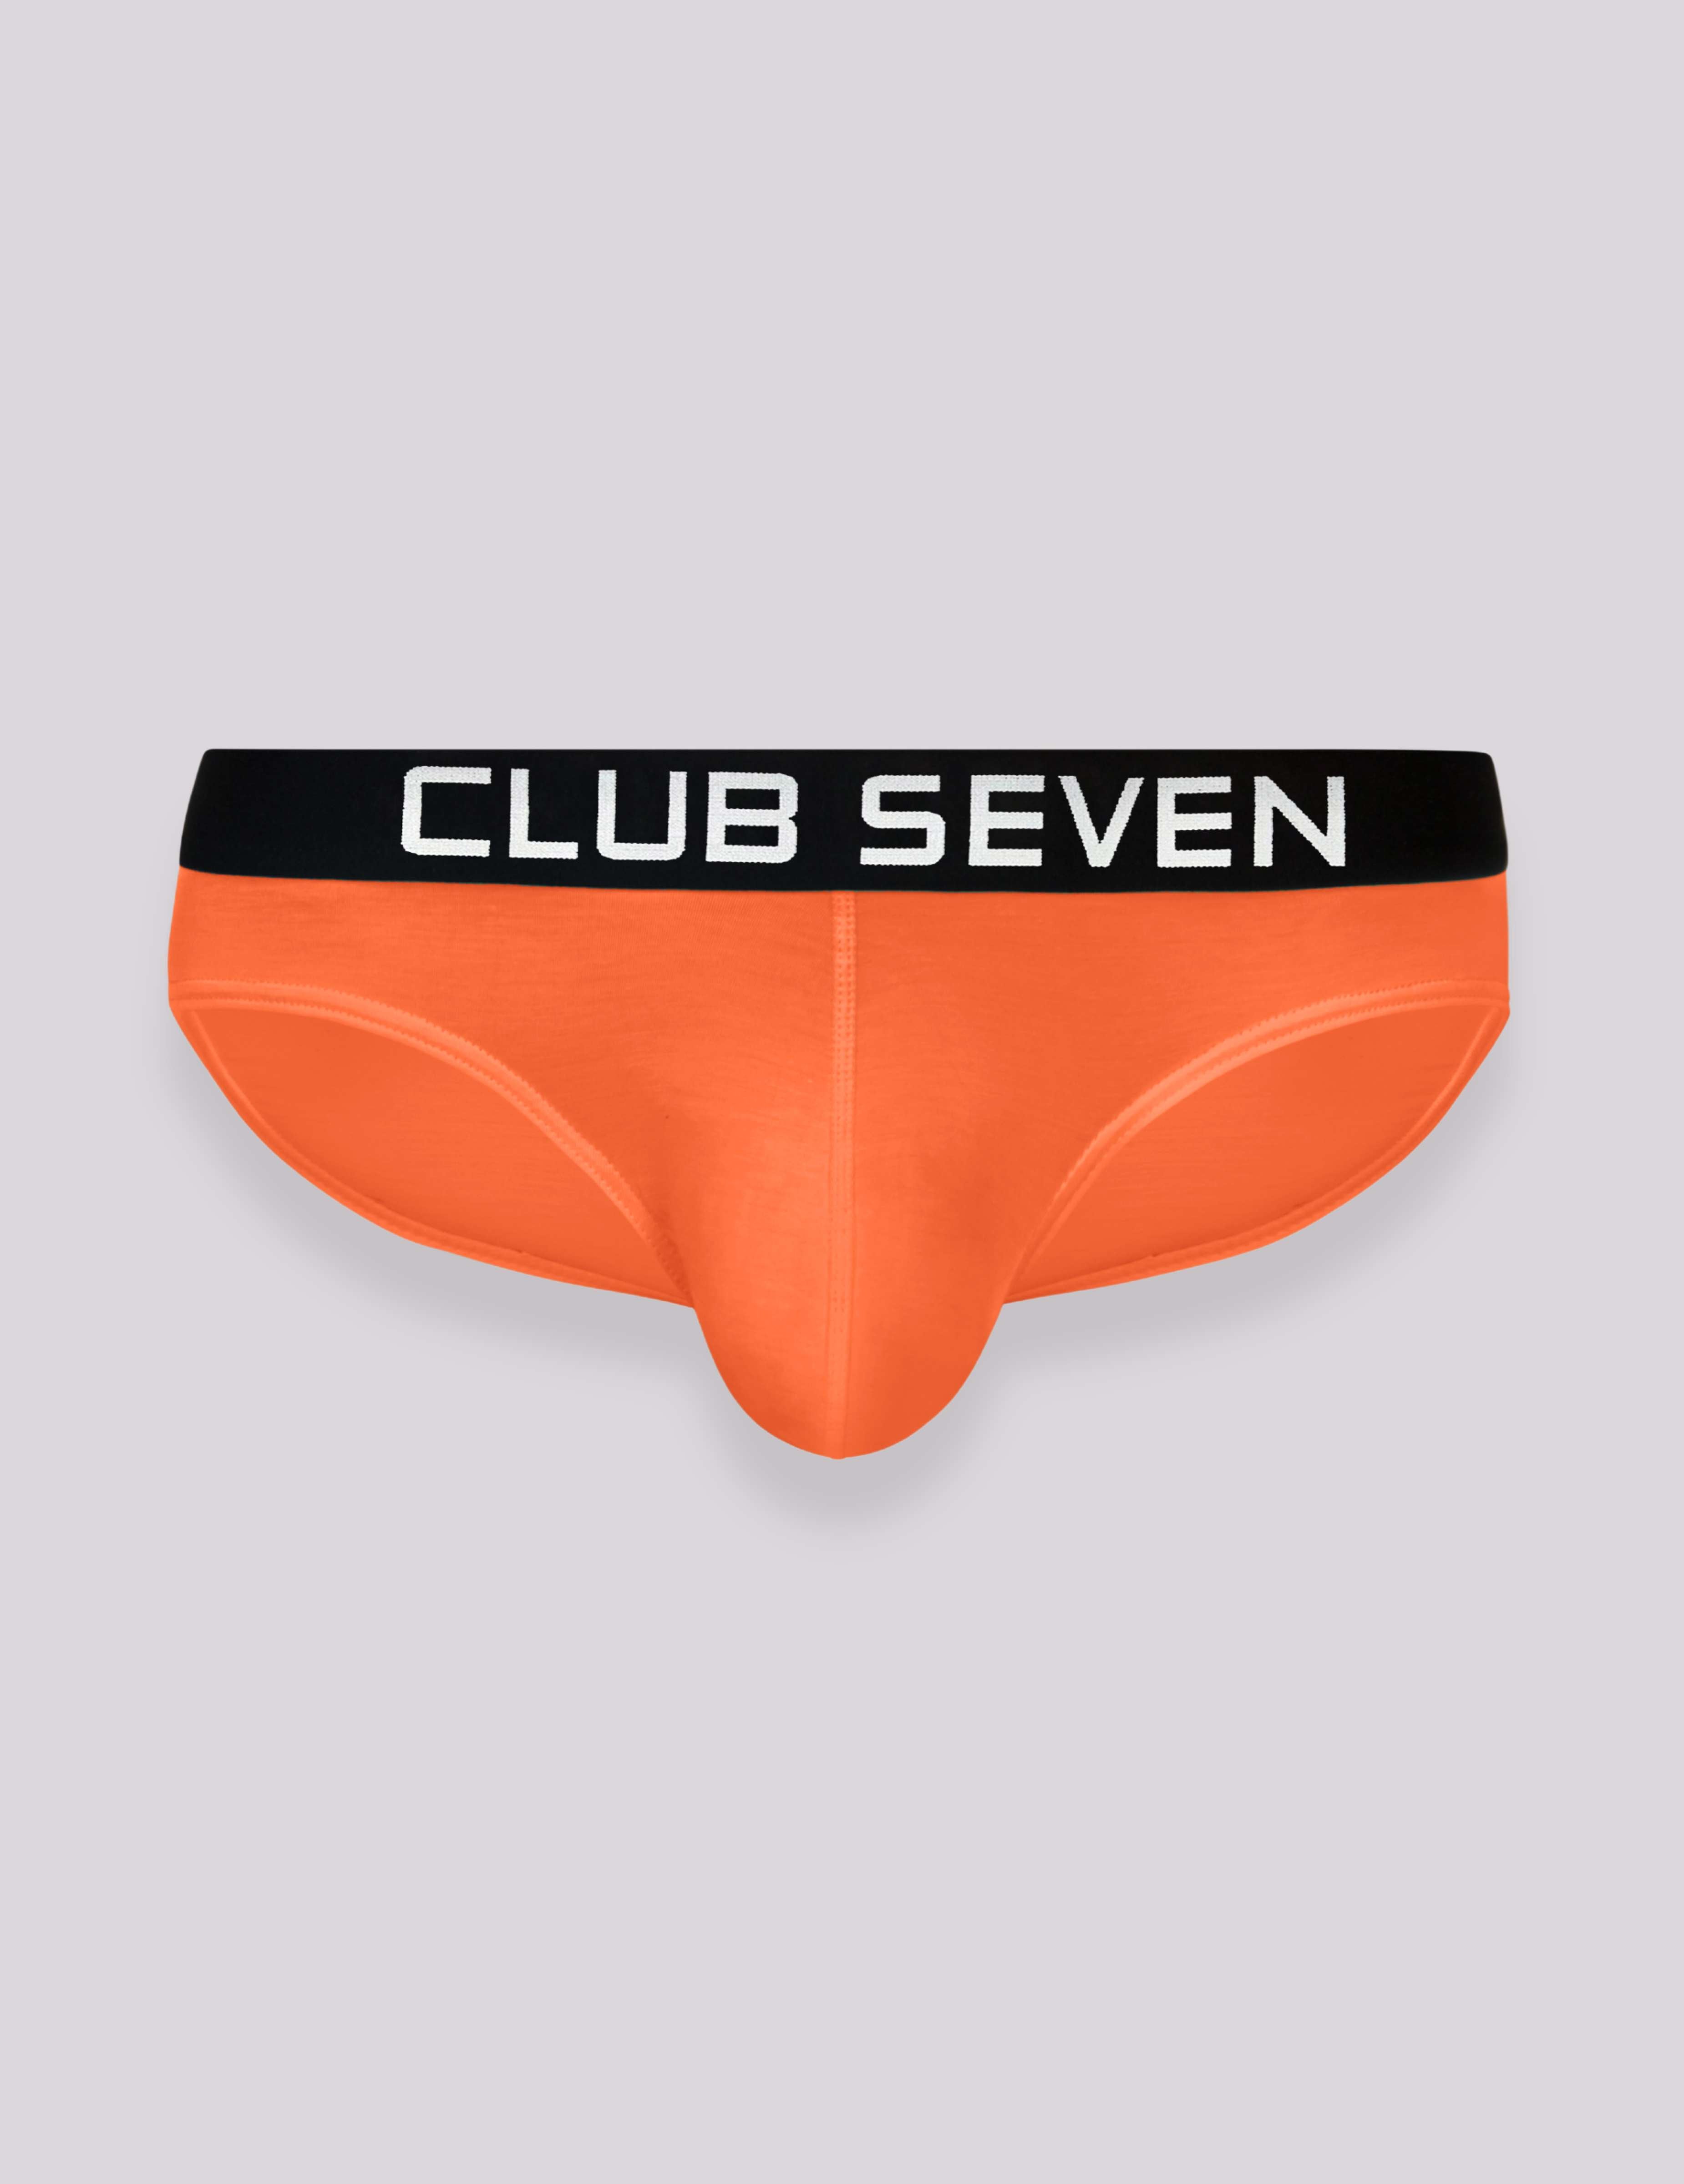 Shop Underwear for Men - Club Seven Menswear